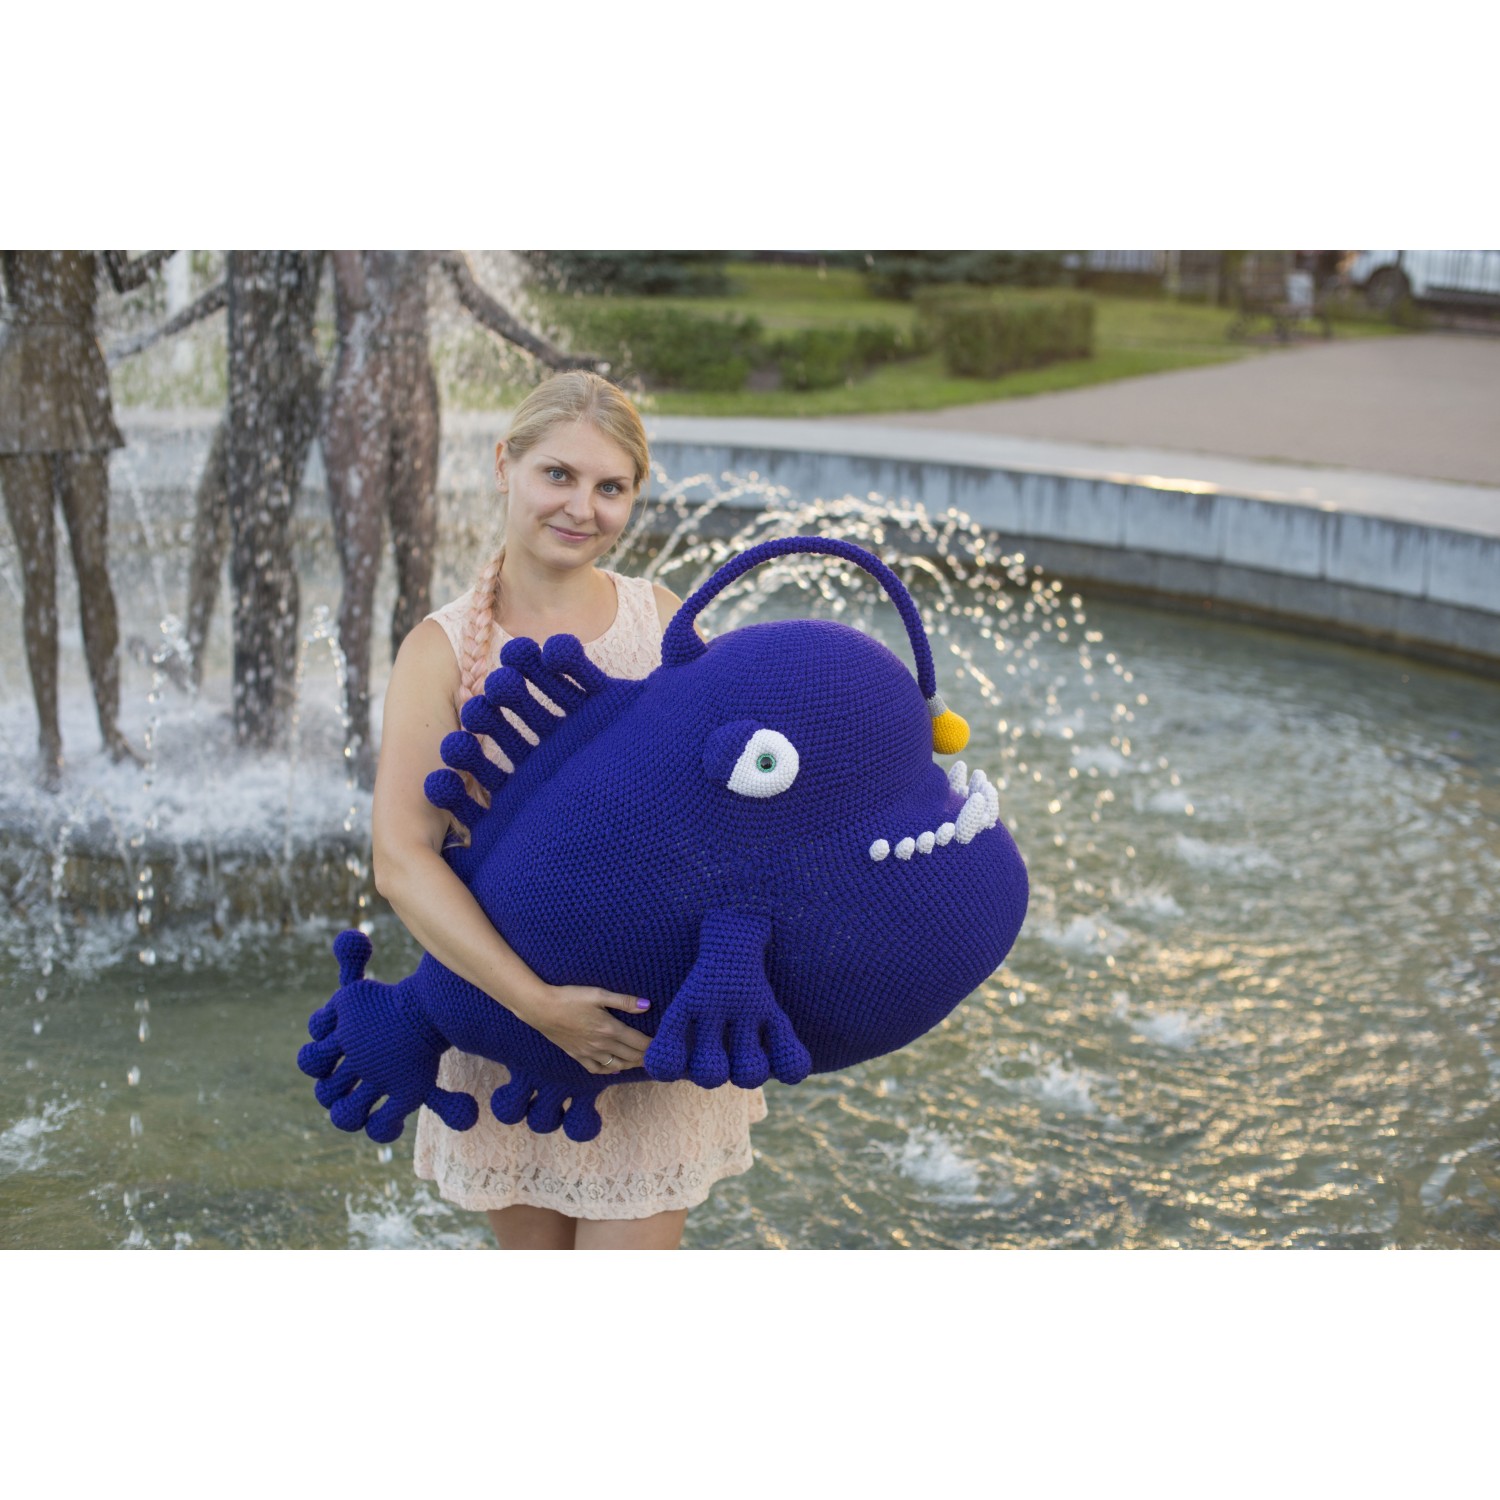 Stuffed sea creature, plush sea animal, giant angler fish toy